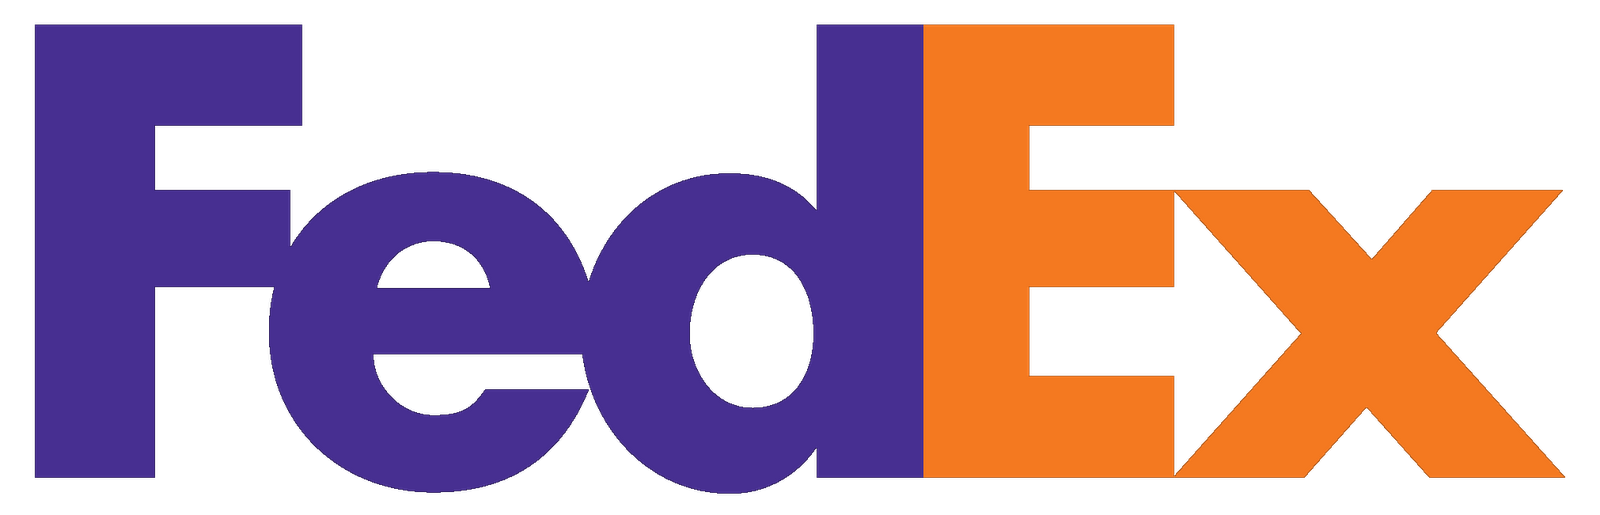 Международная служба доставки FedEx